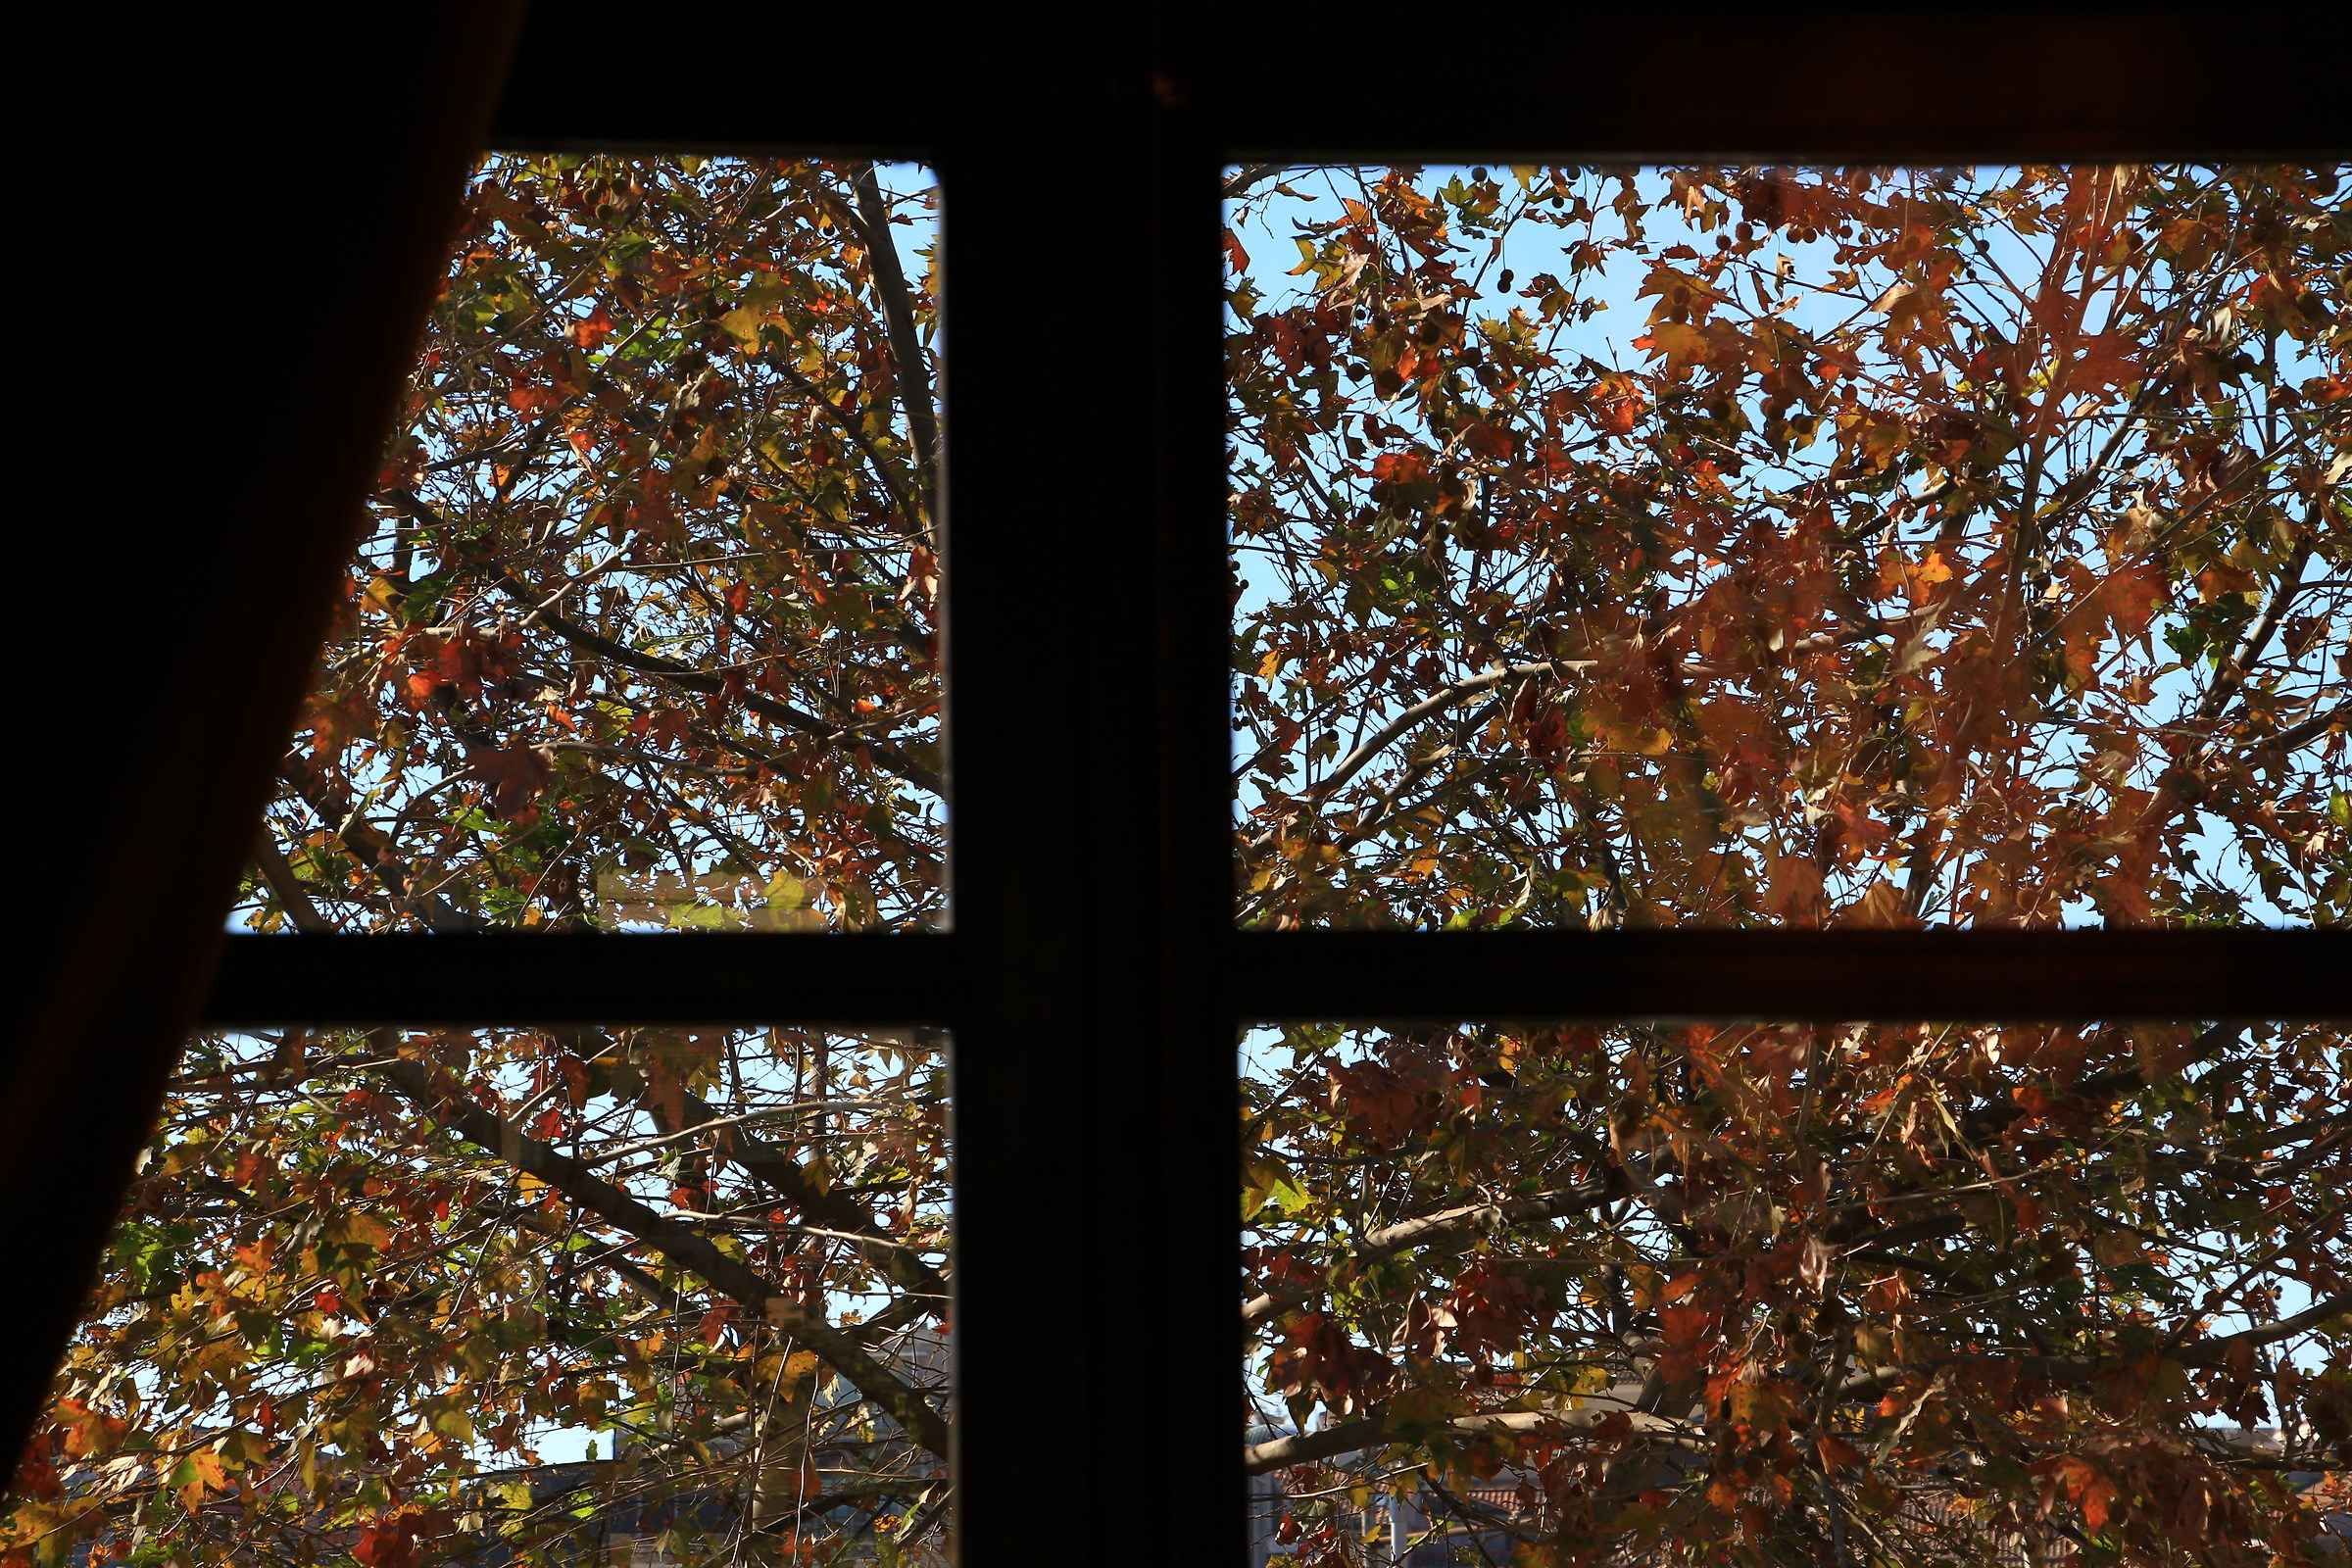 A window in the Autumnal garden......